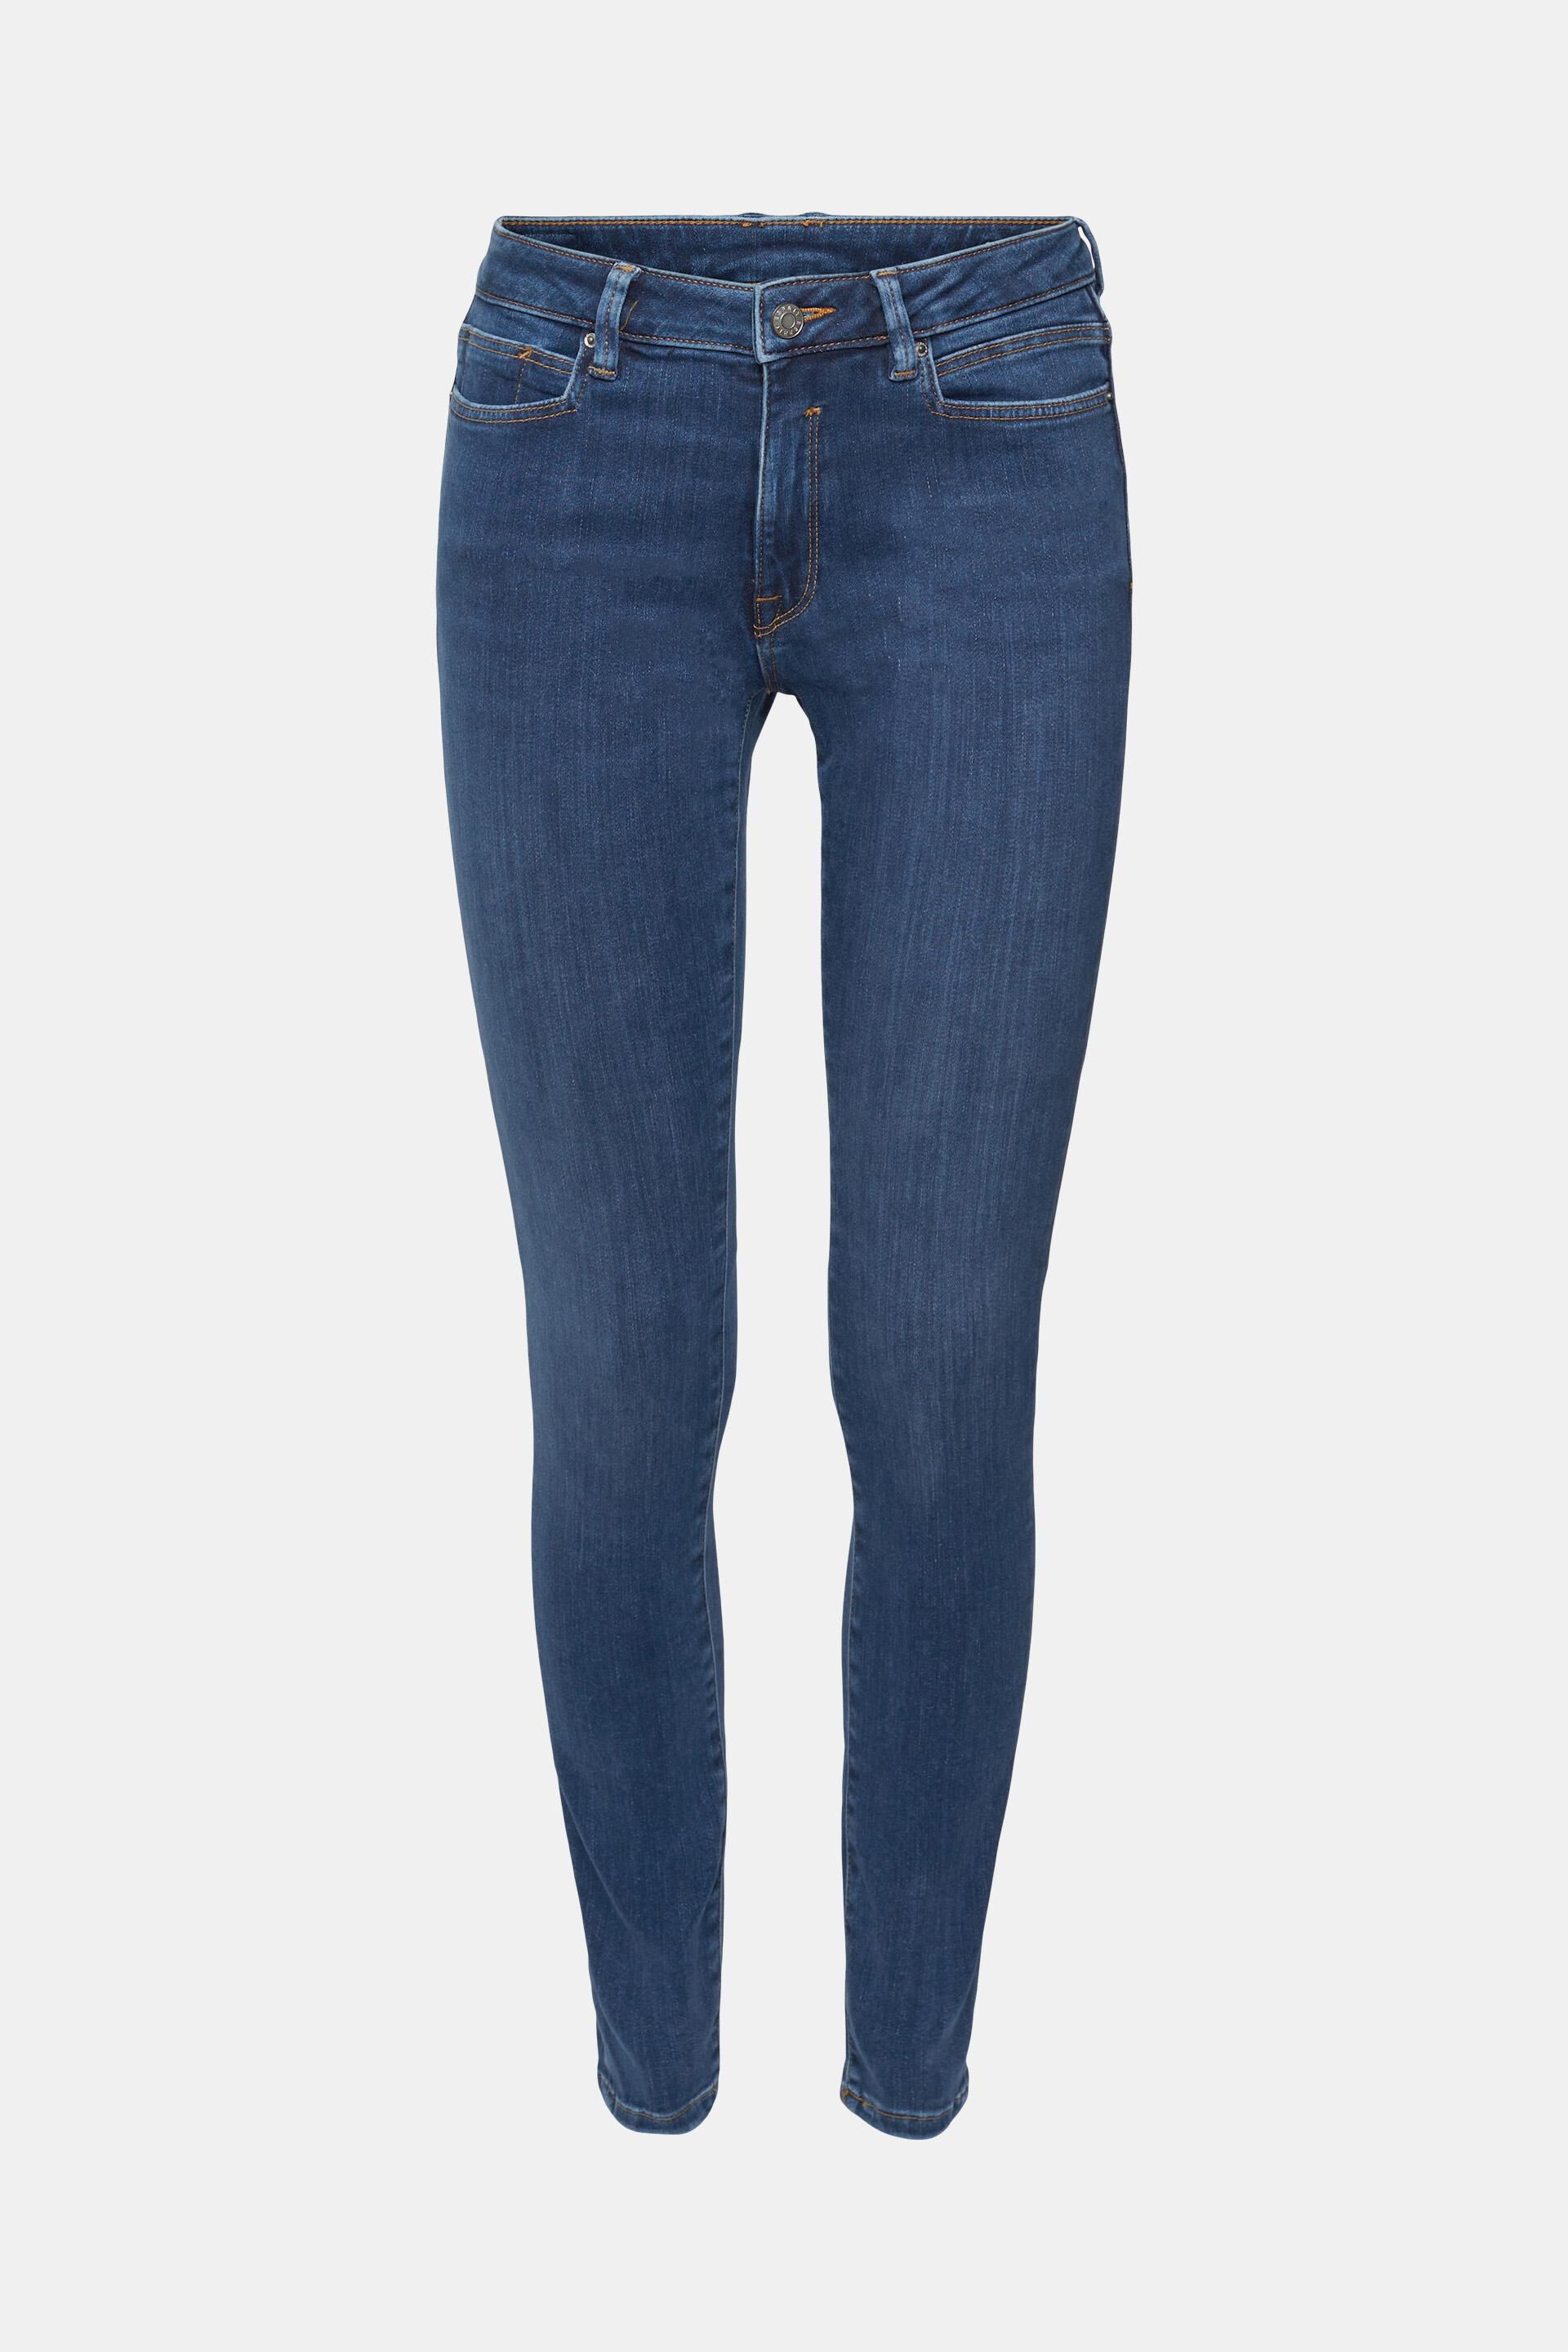 Esprit Denim 999ee1b802 Skinny Jeans in Blue Save 49% Womens Clothing Jeans Skinny jeans 